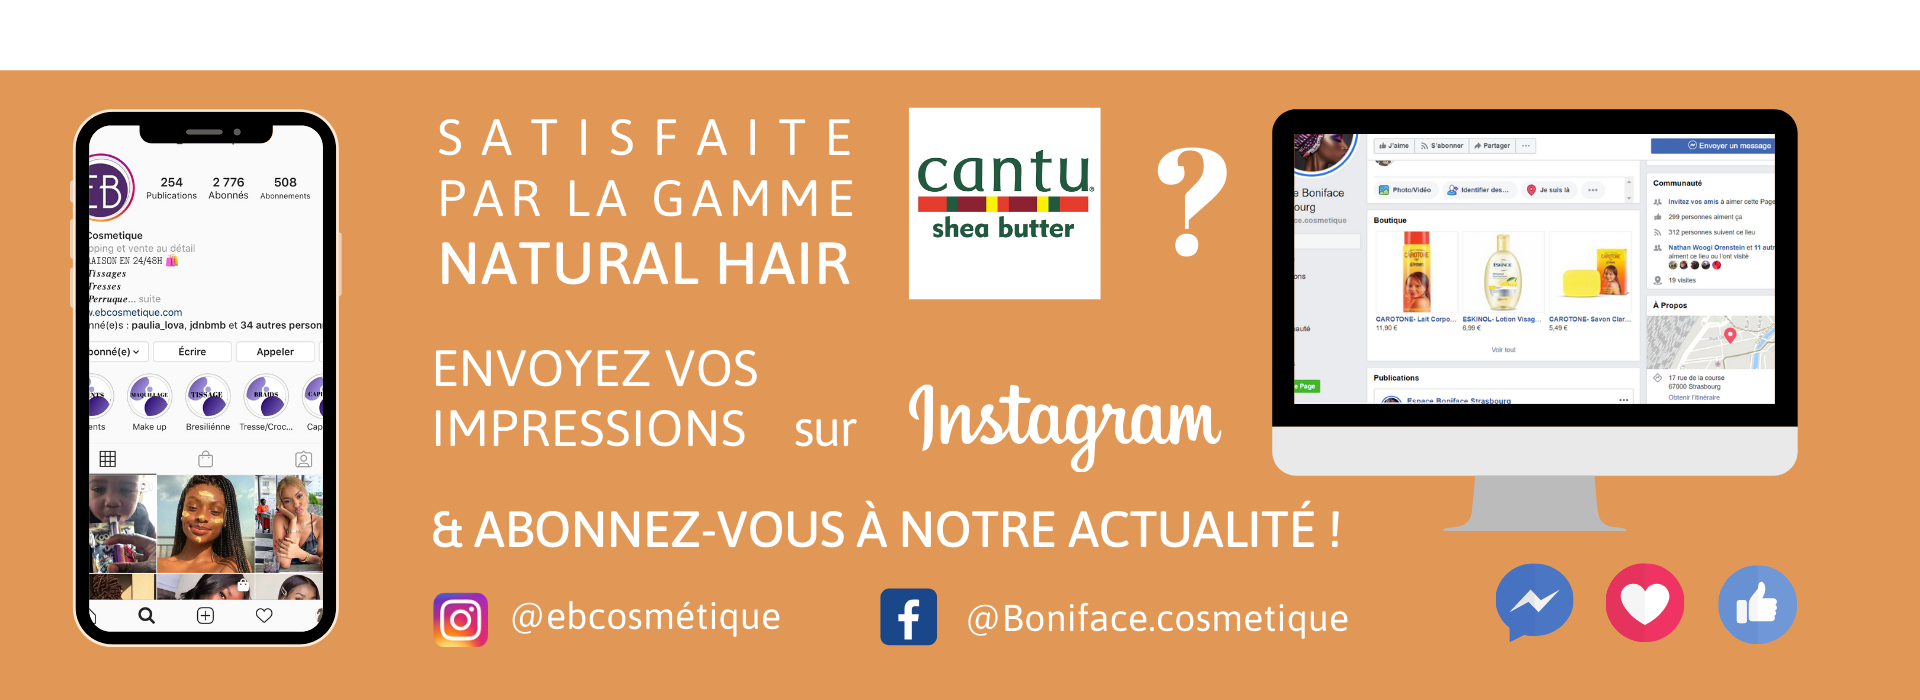 fiche produit ebcosmetique cantu shea butter natural hair daily hair moisturizer routine capillaire afro bouclé facebook instagram